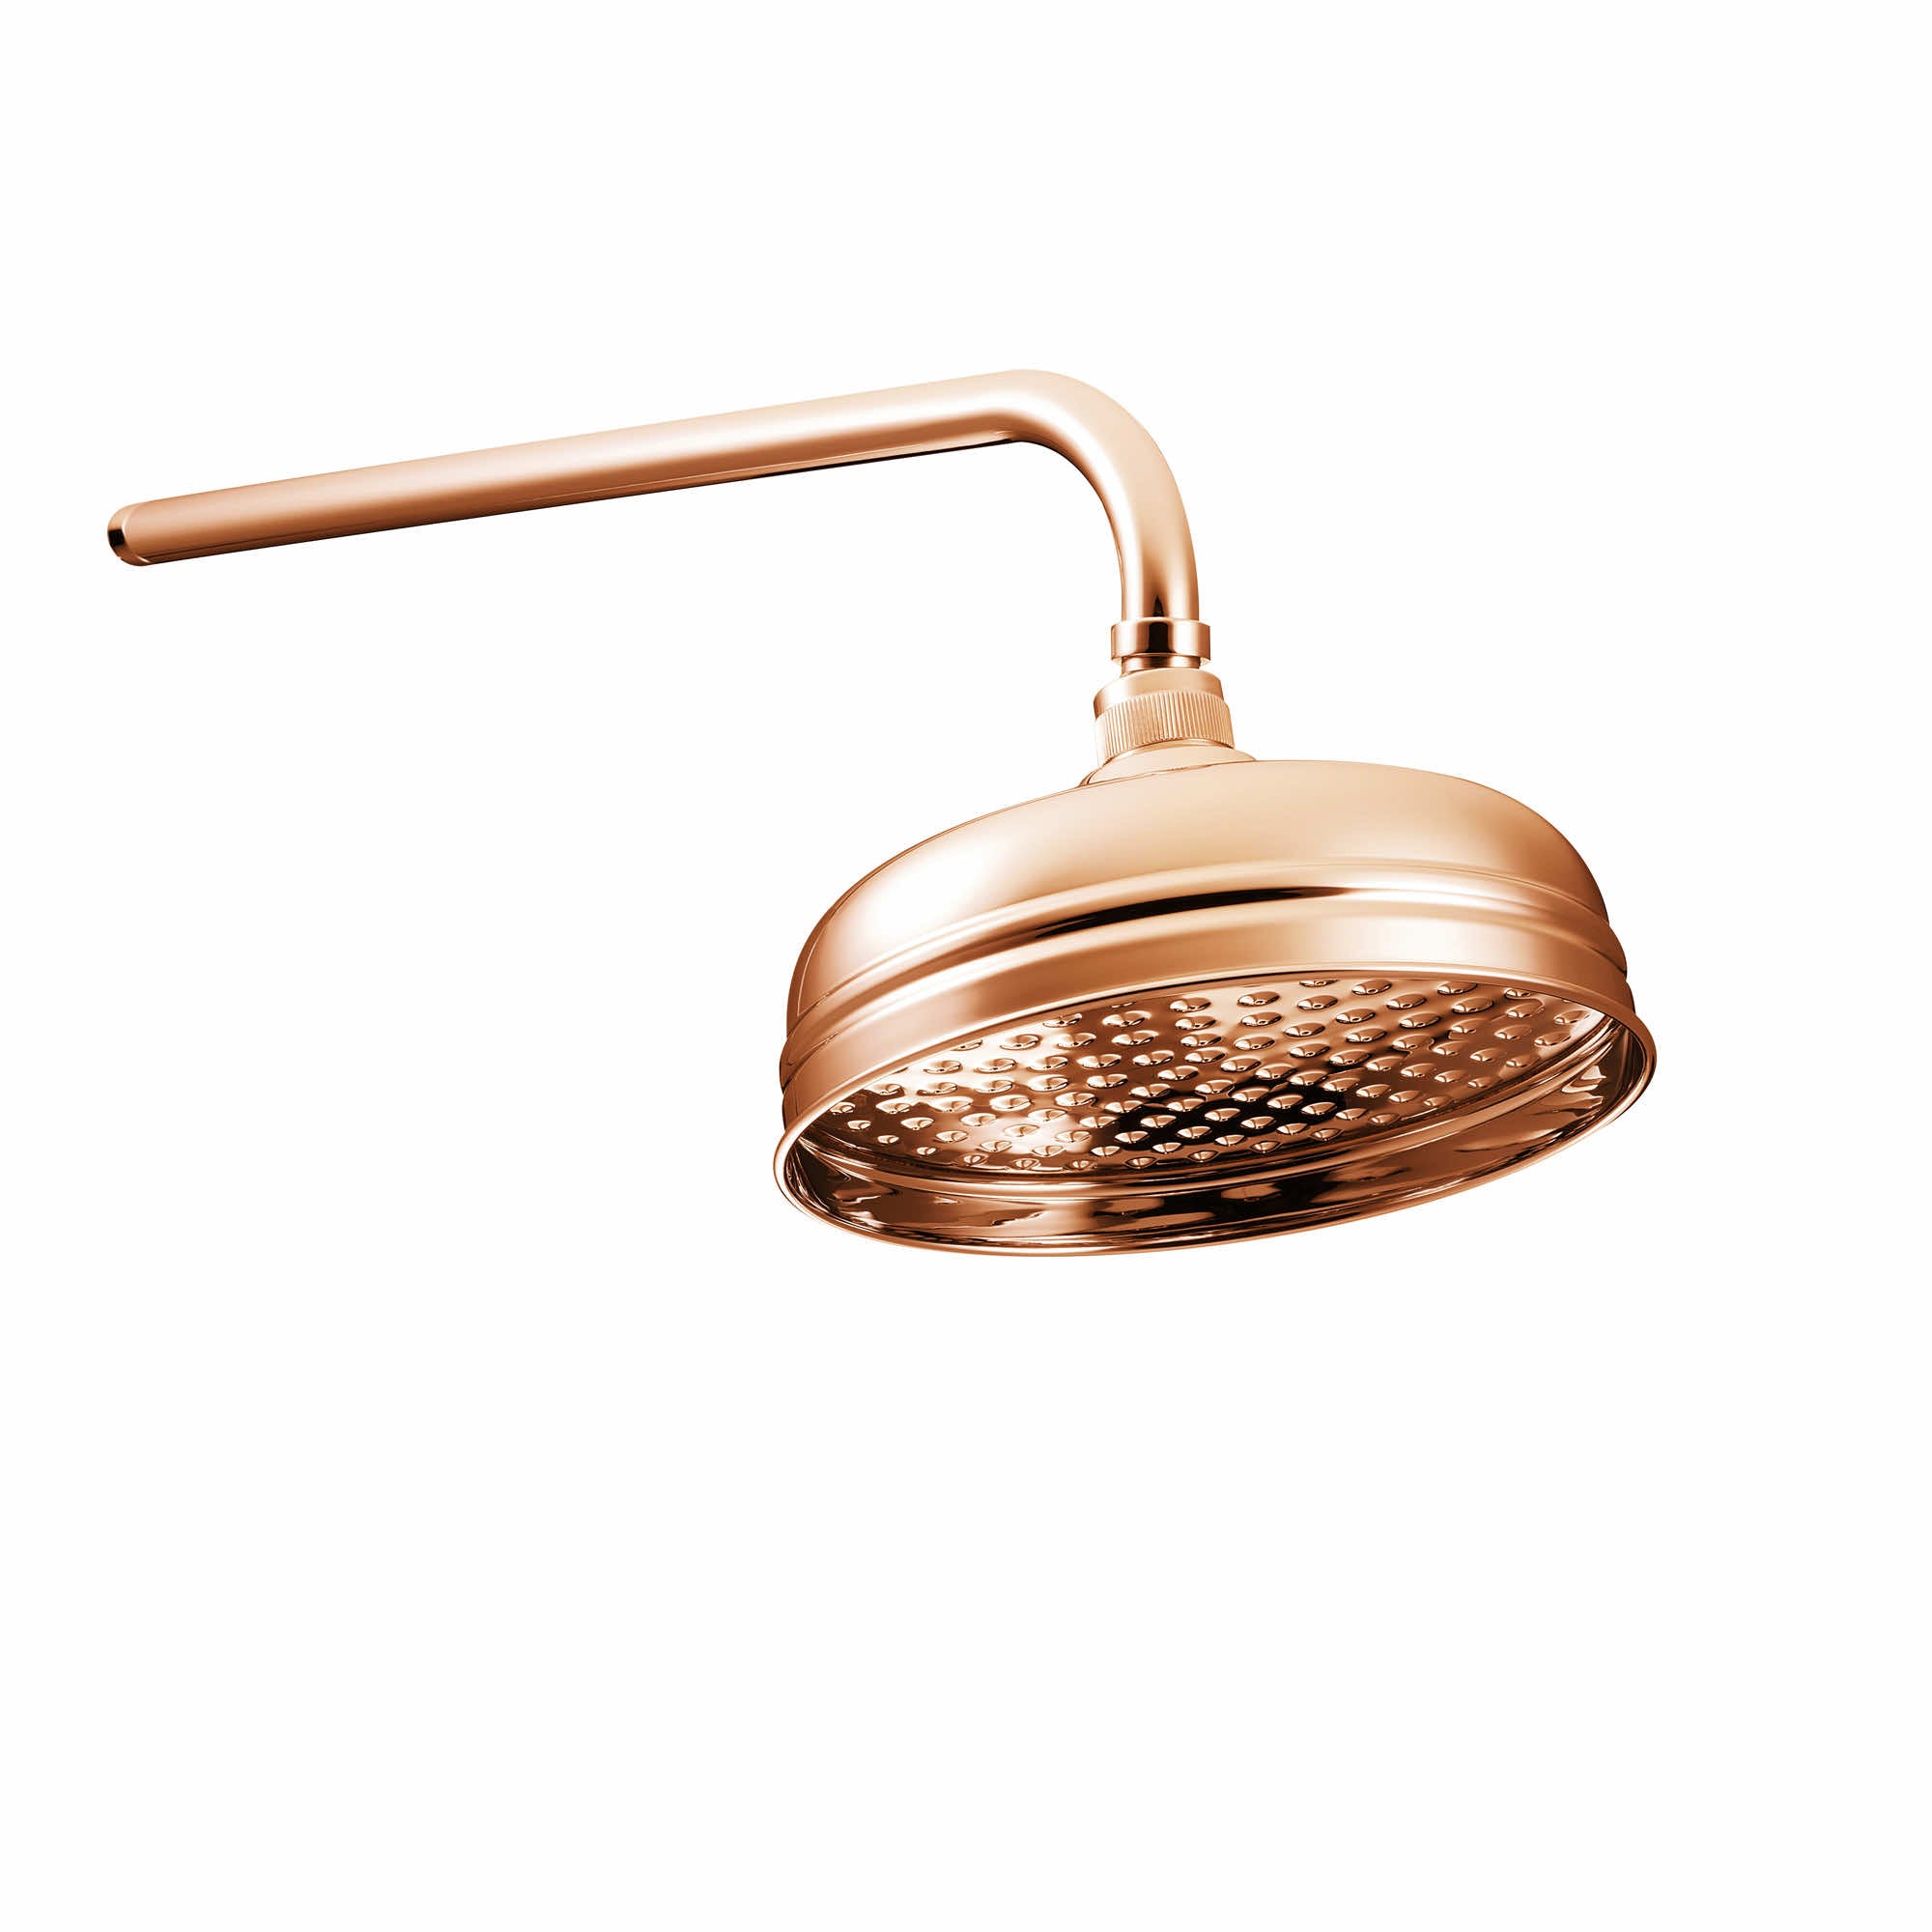 copper shower head 8 inches - 200mm diameter